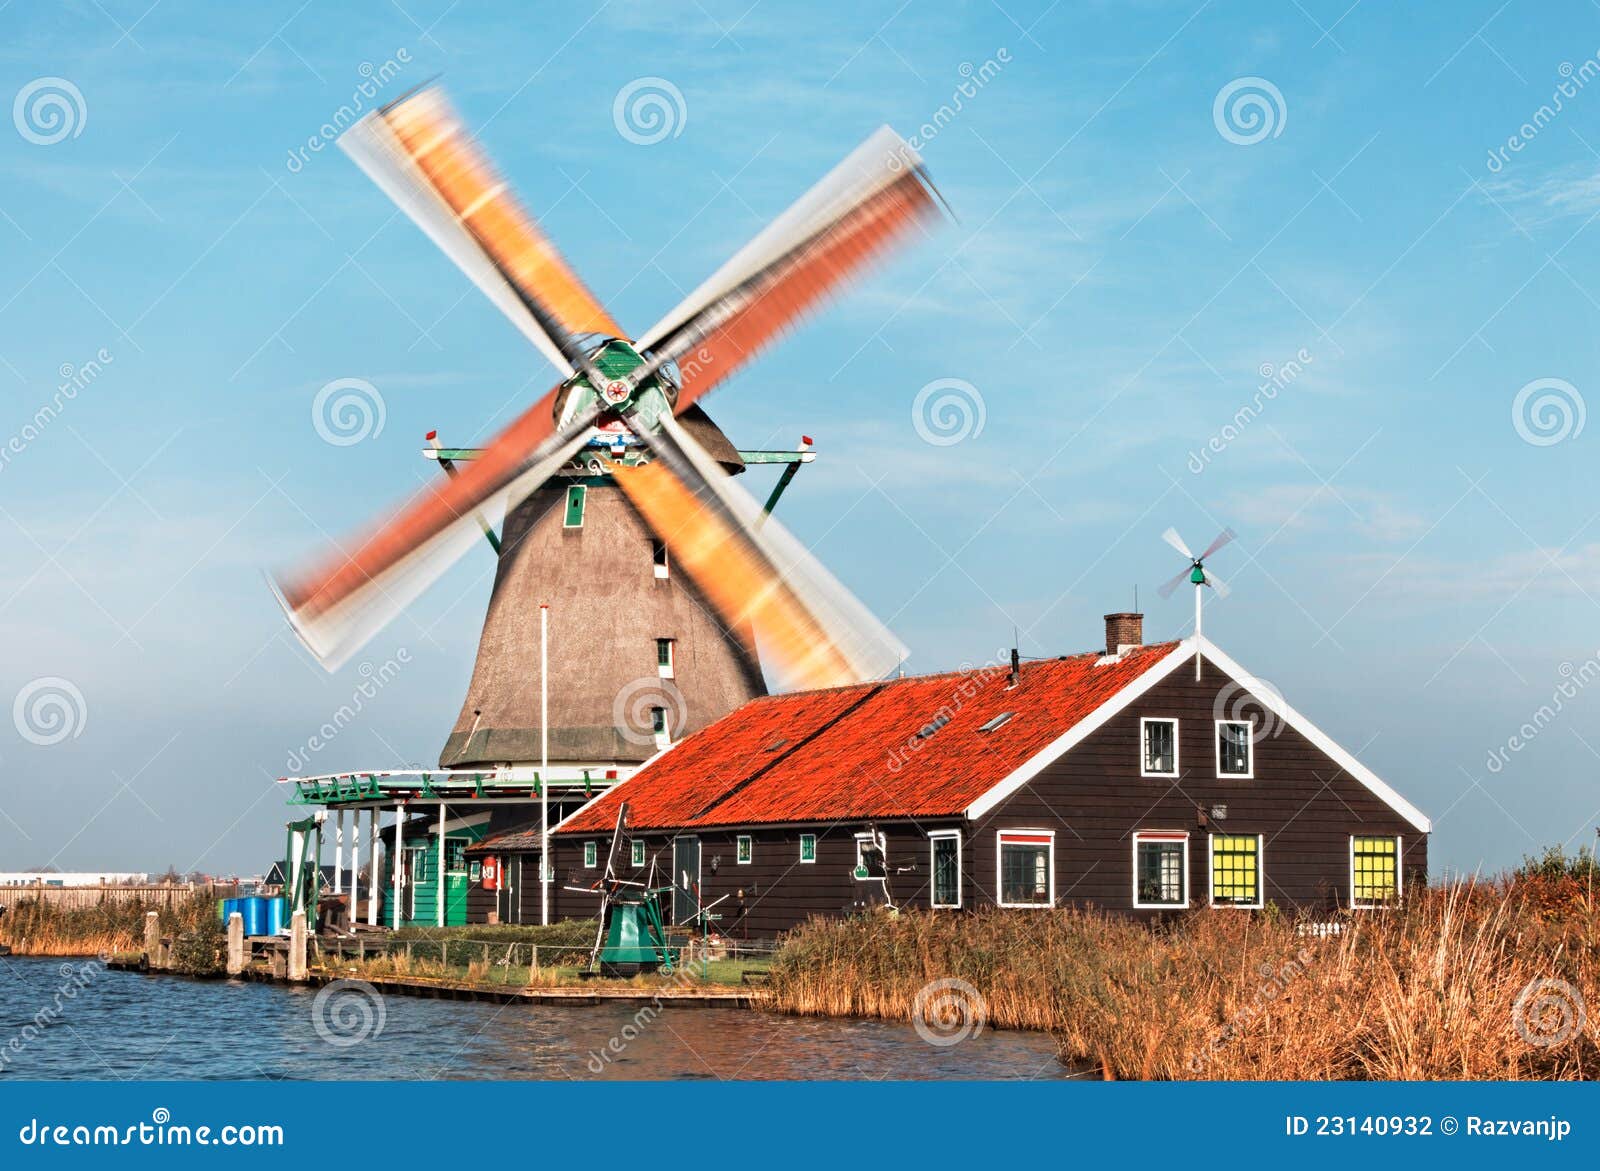 Dutch Windmill Stock Photography - Image: 23140932